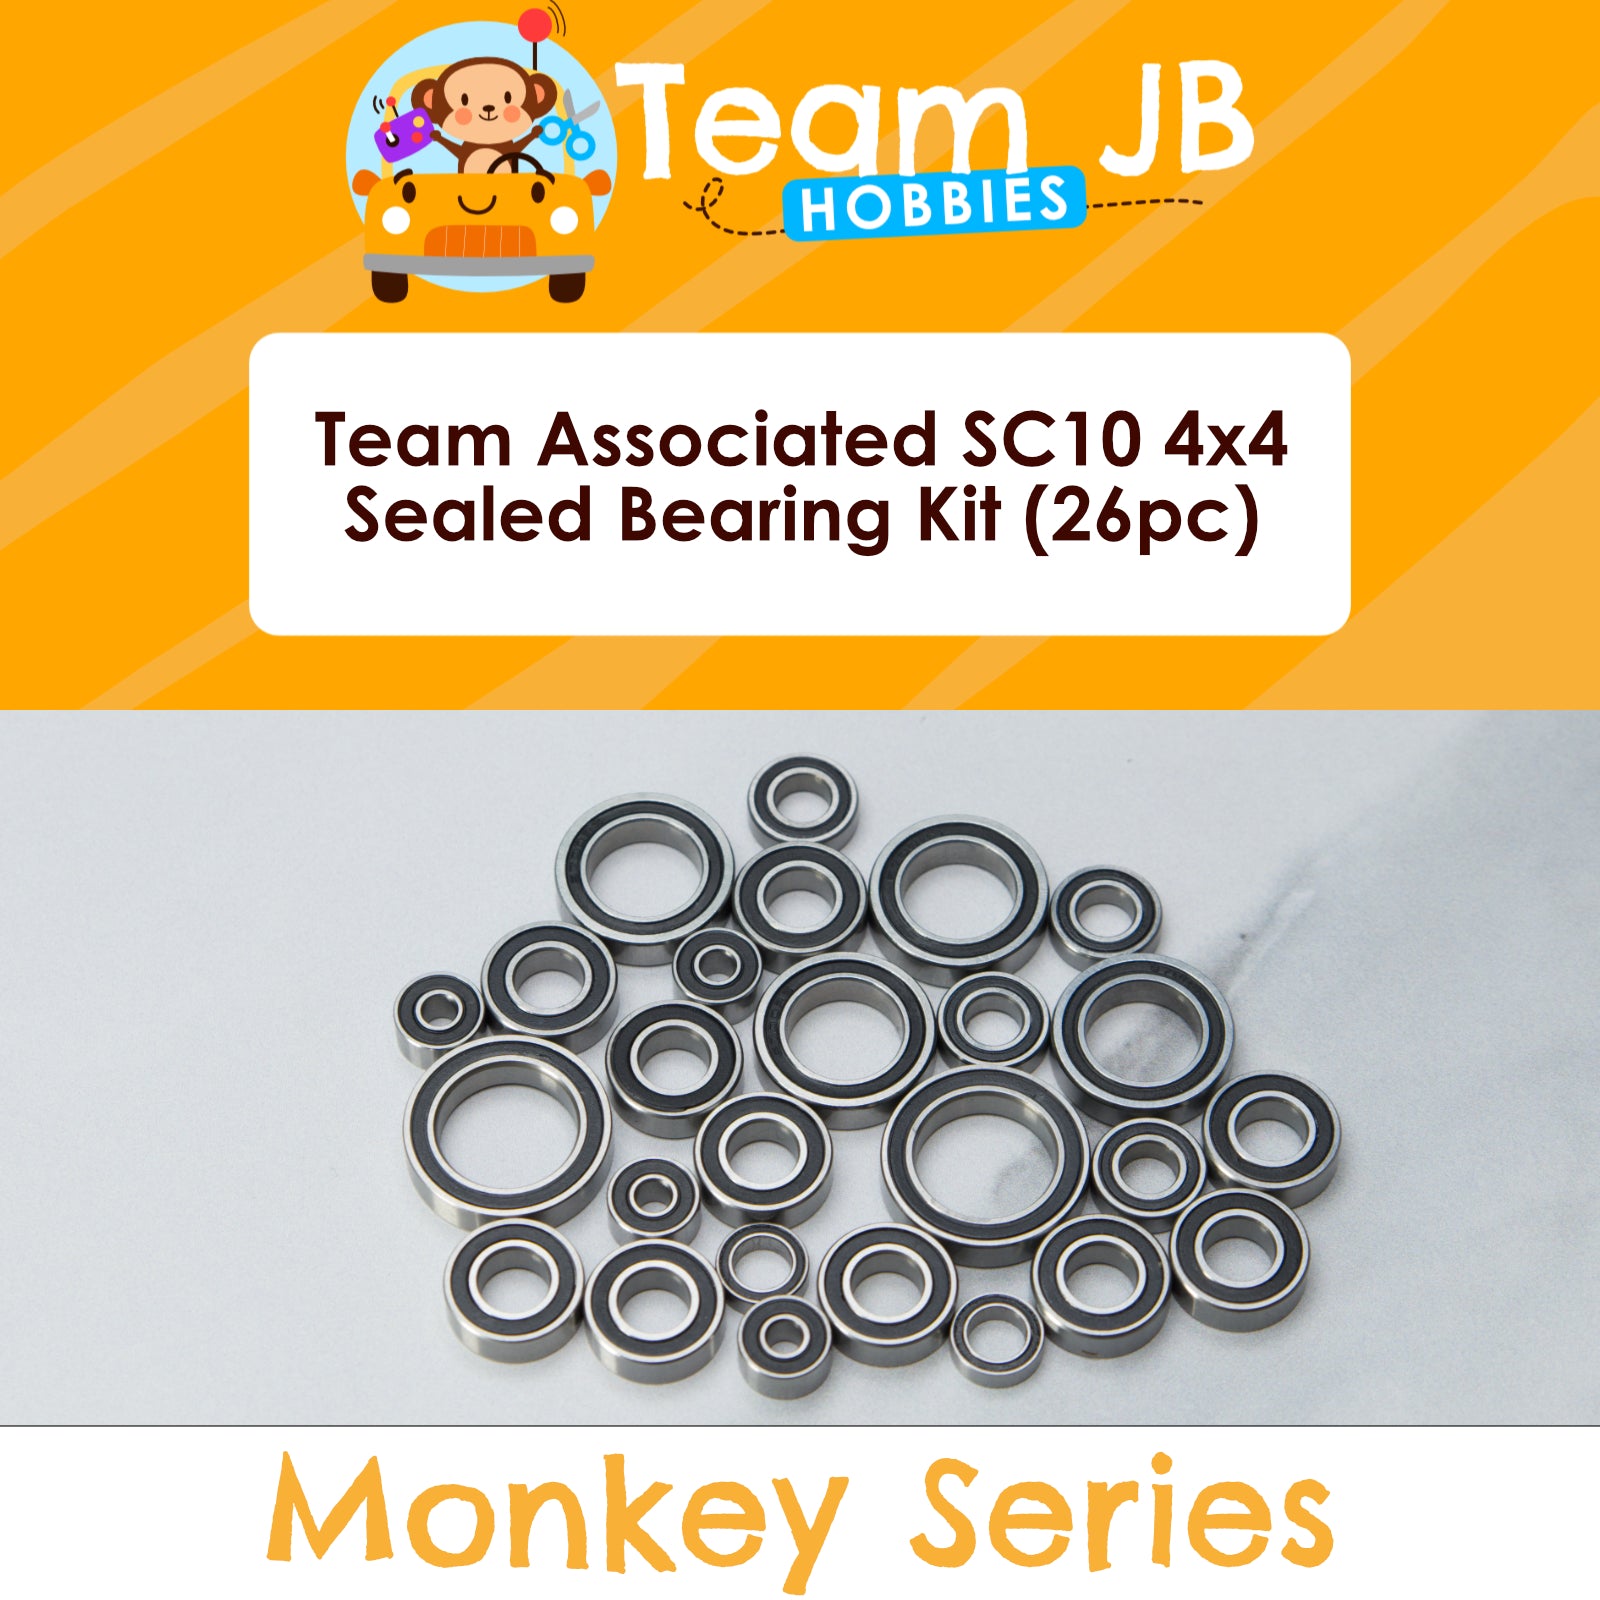 Team Associated SC10 4x4 - Sealed Bearing Kit